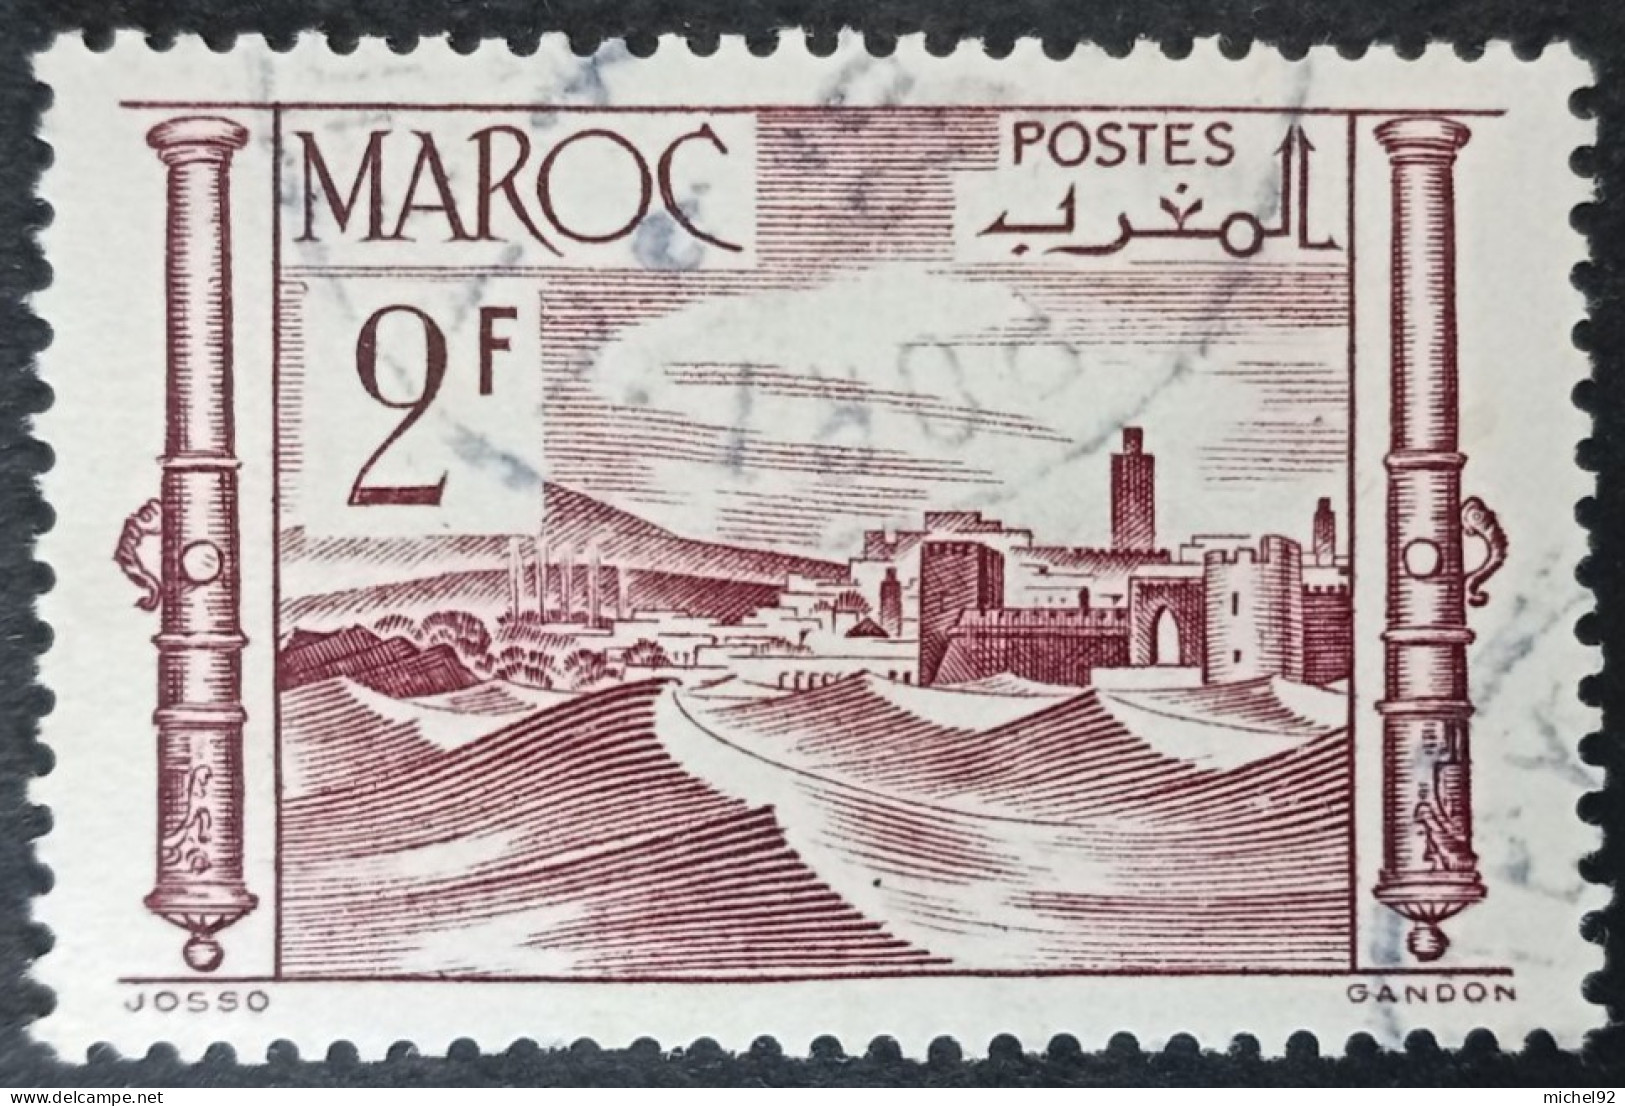 Maroc 1947-49 - YT N°253A - Oblitéré - Usati